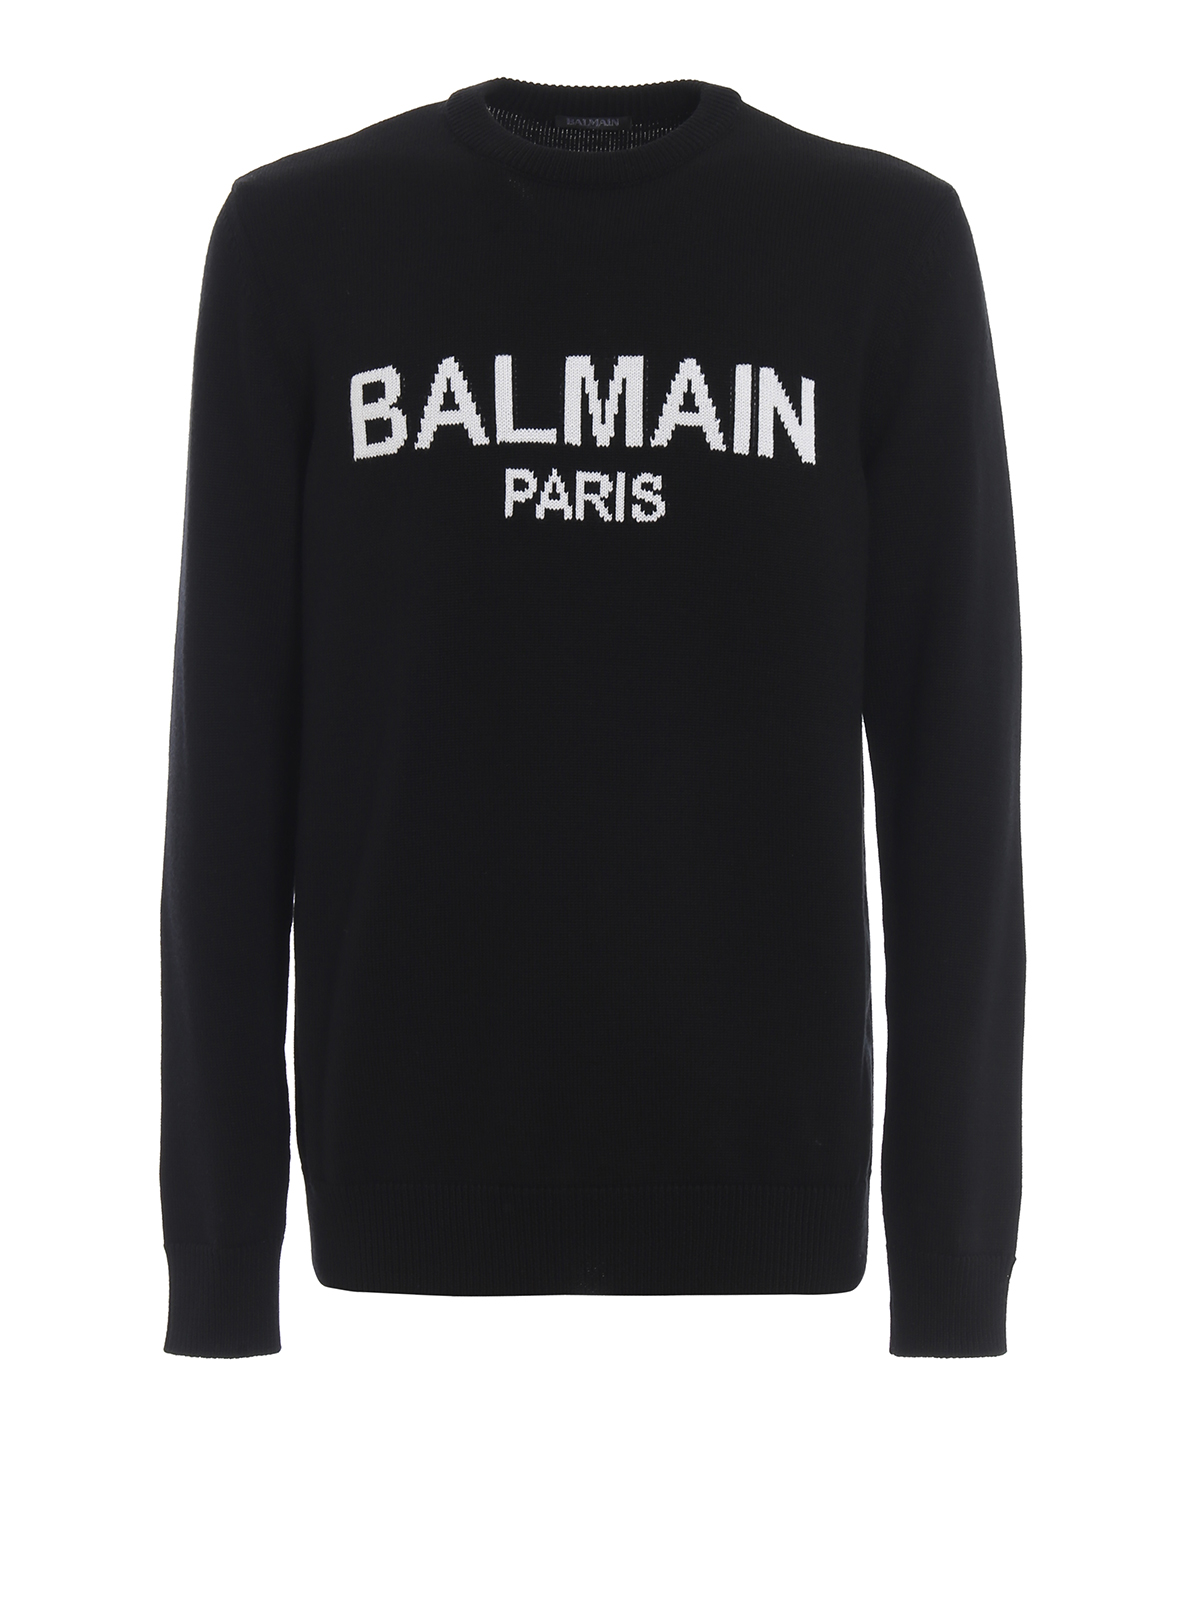 Crew necks Balmain - Balmain Paris sweater - RH13662K060EAB | iKRIX.com